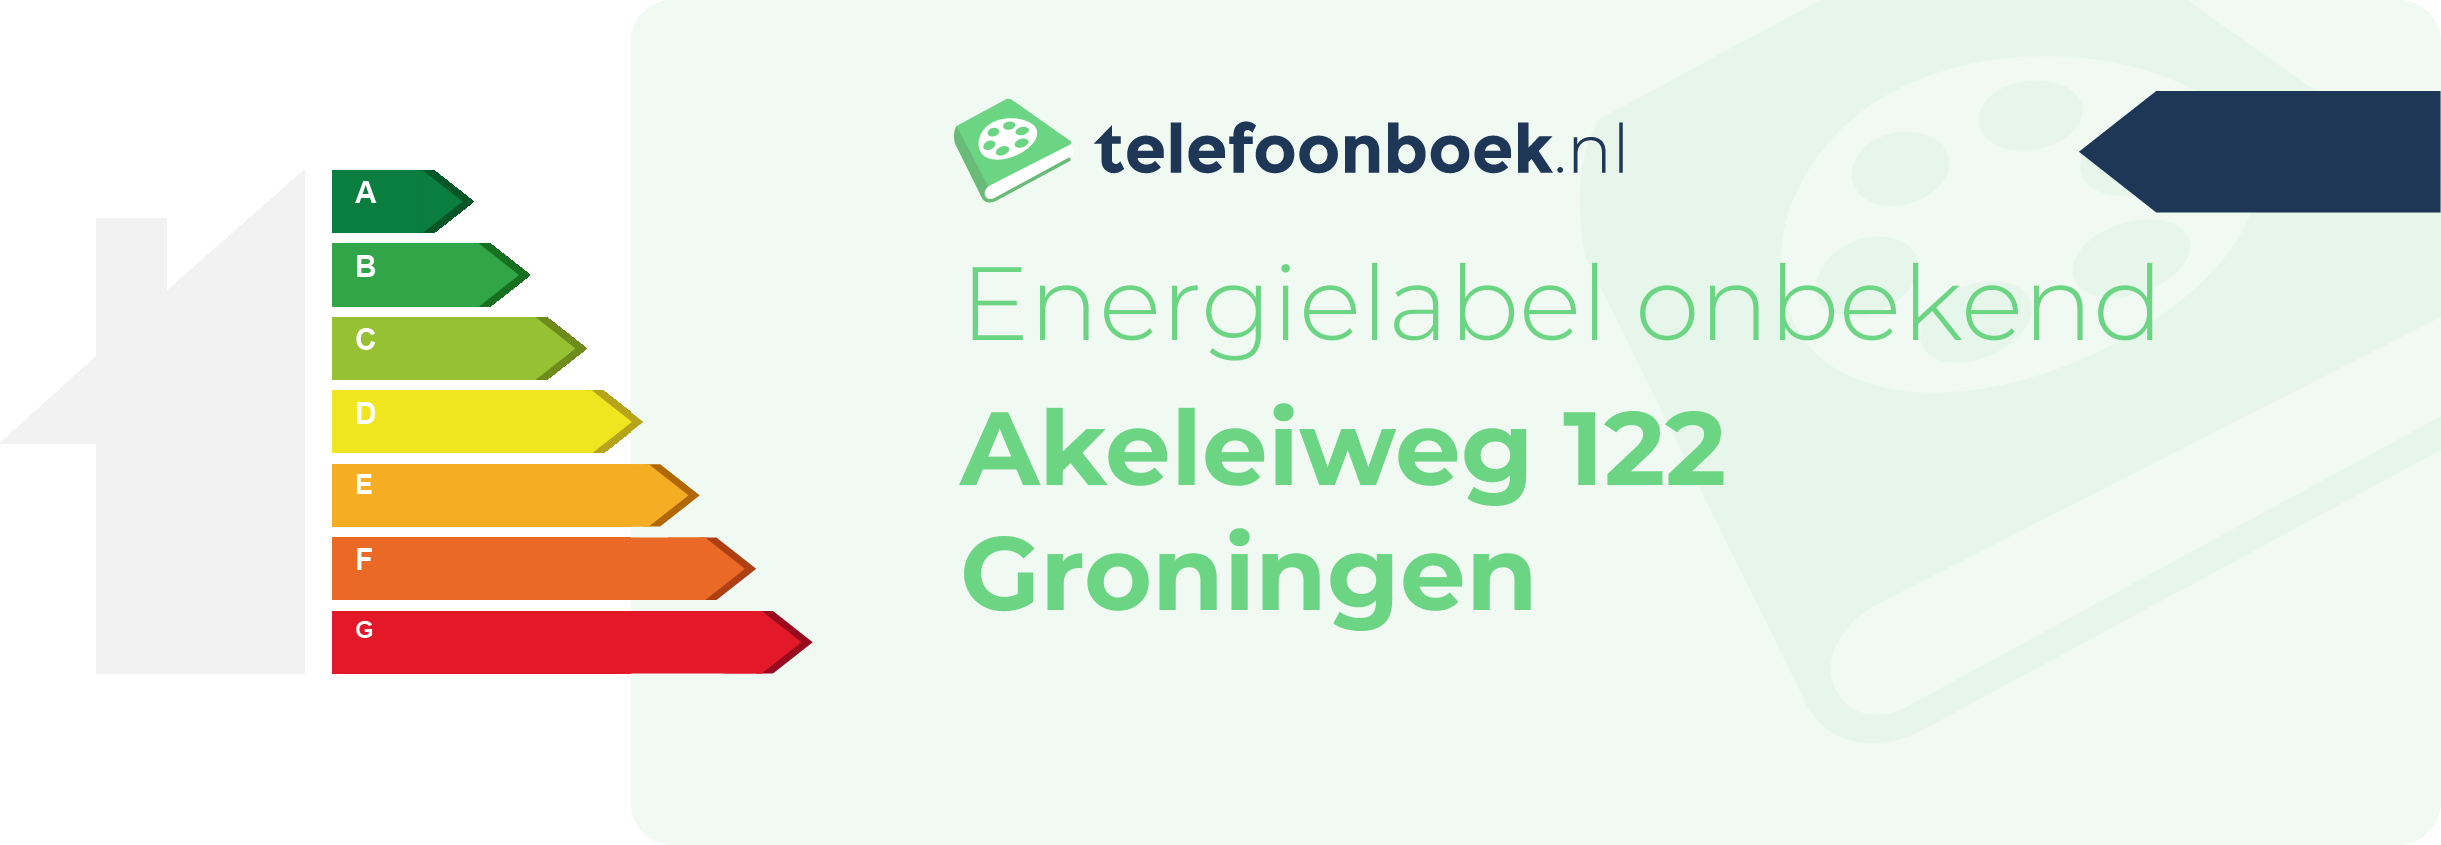 Energielabel Akeleiweg 122 Groningen